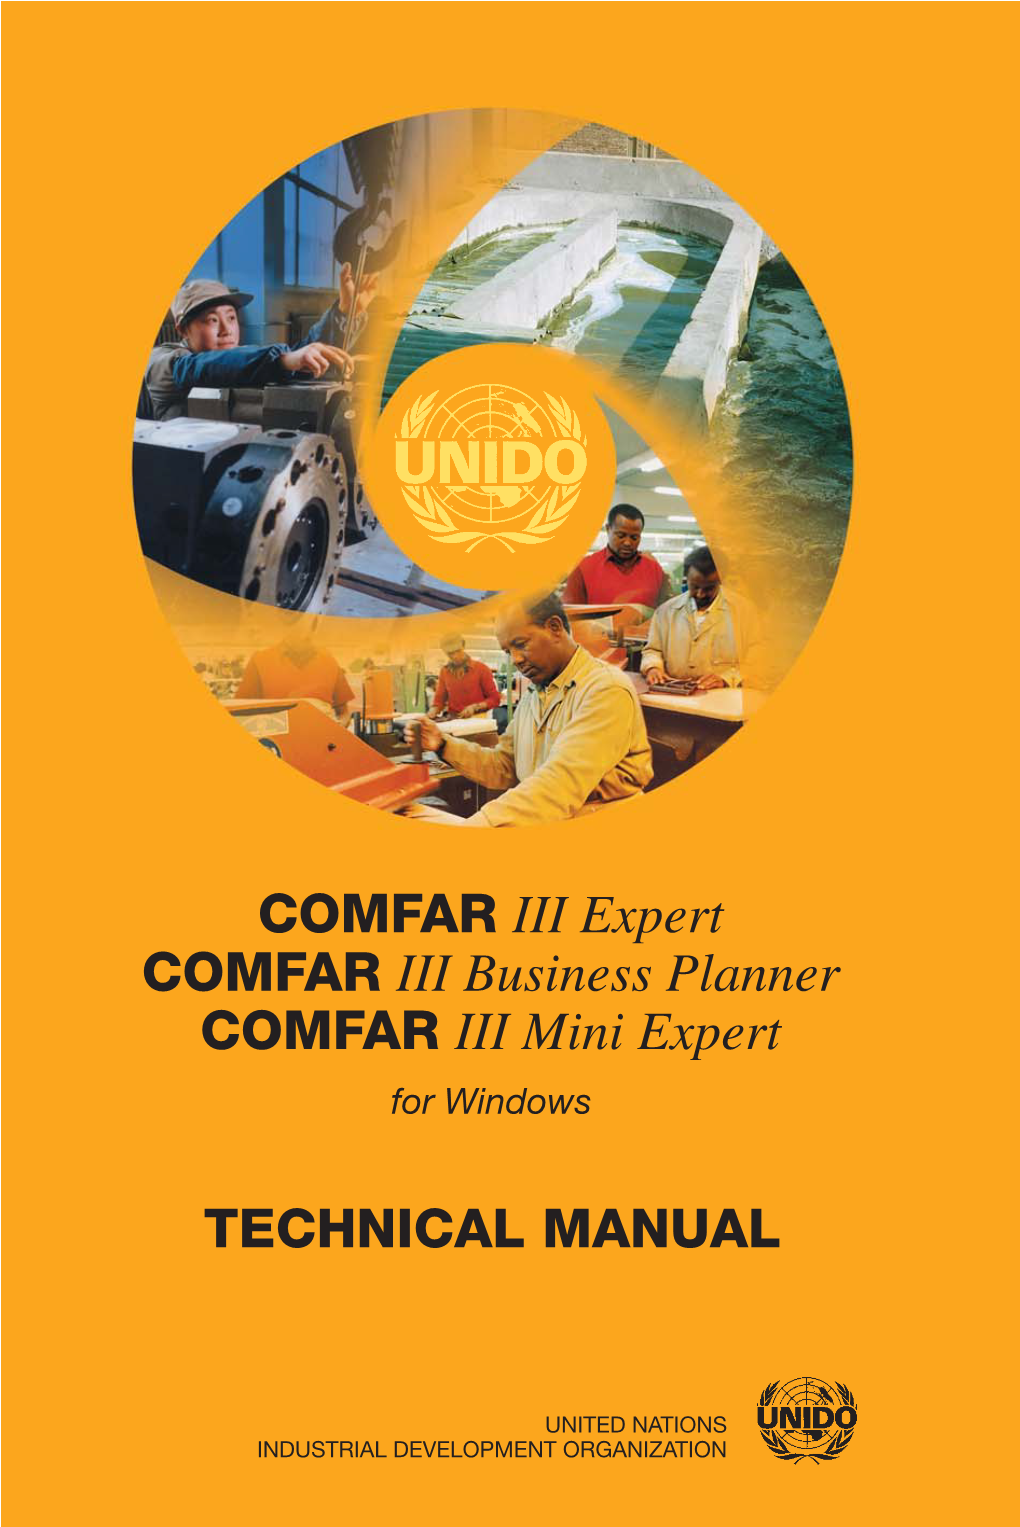 COMFAR III Expert Technical Manual